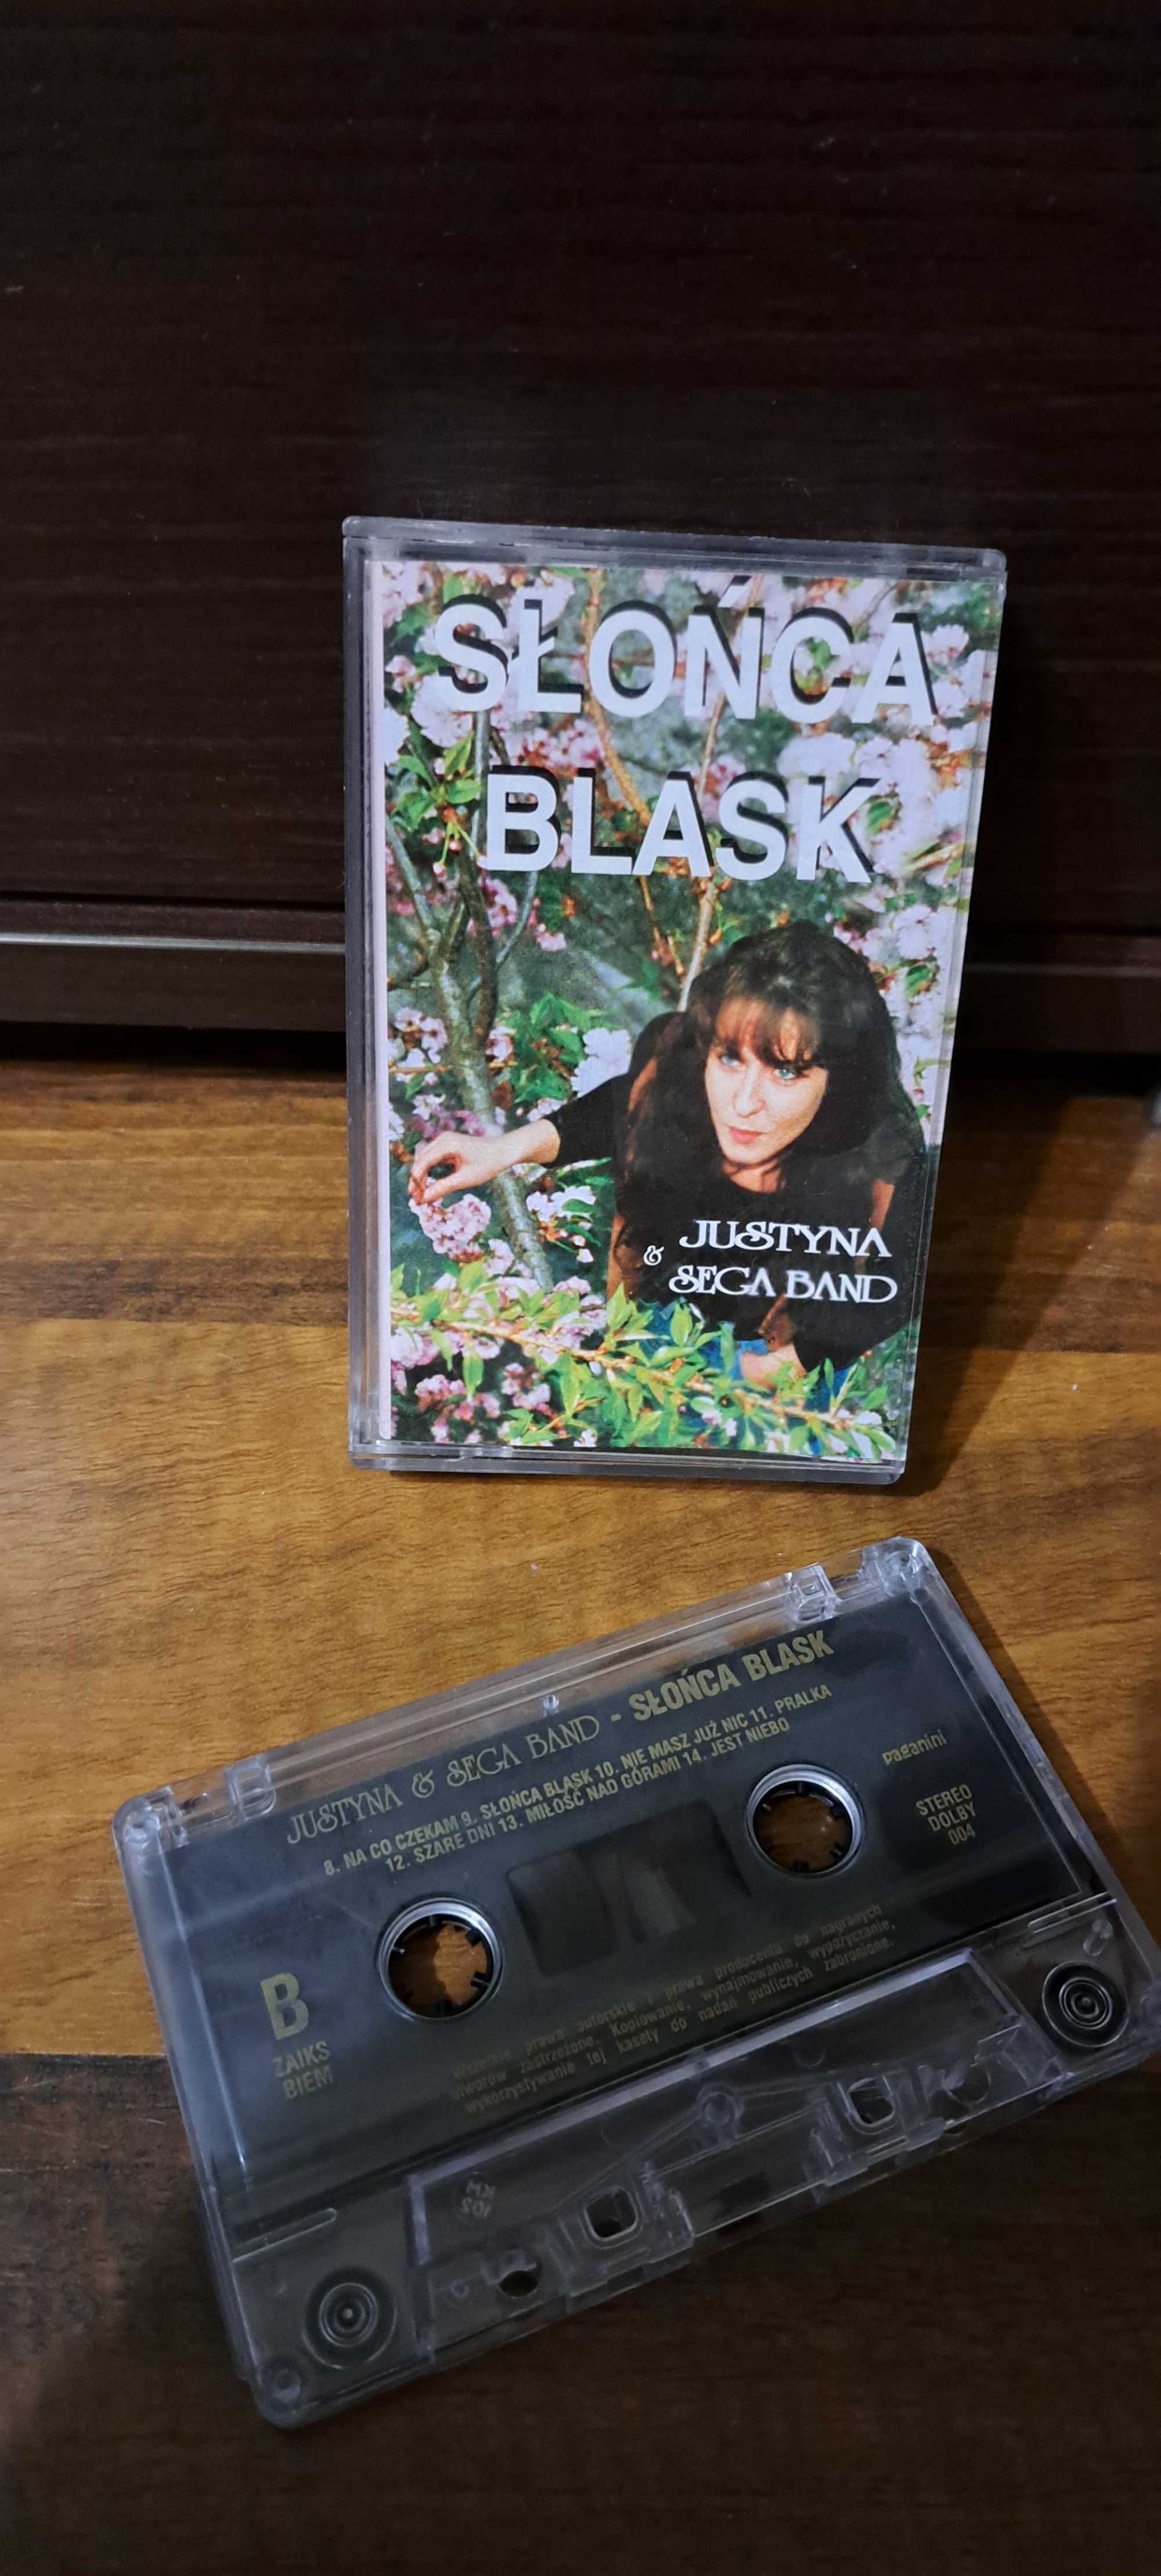 Słońca Blask Justyna & Sega Band Kaseta audio